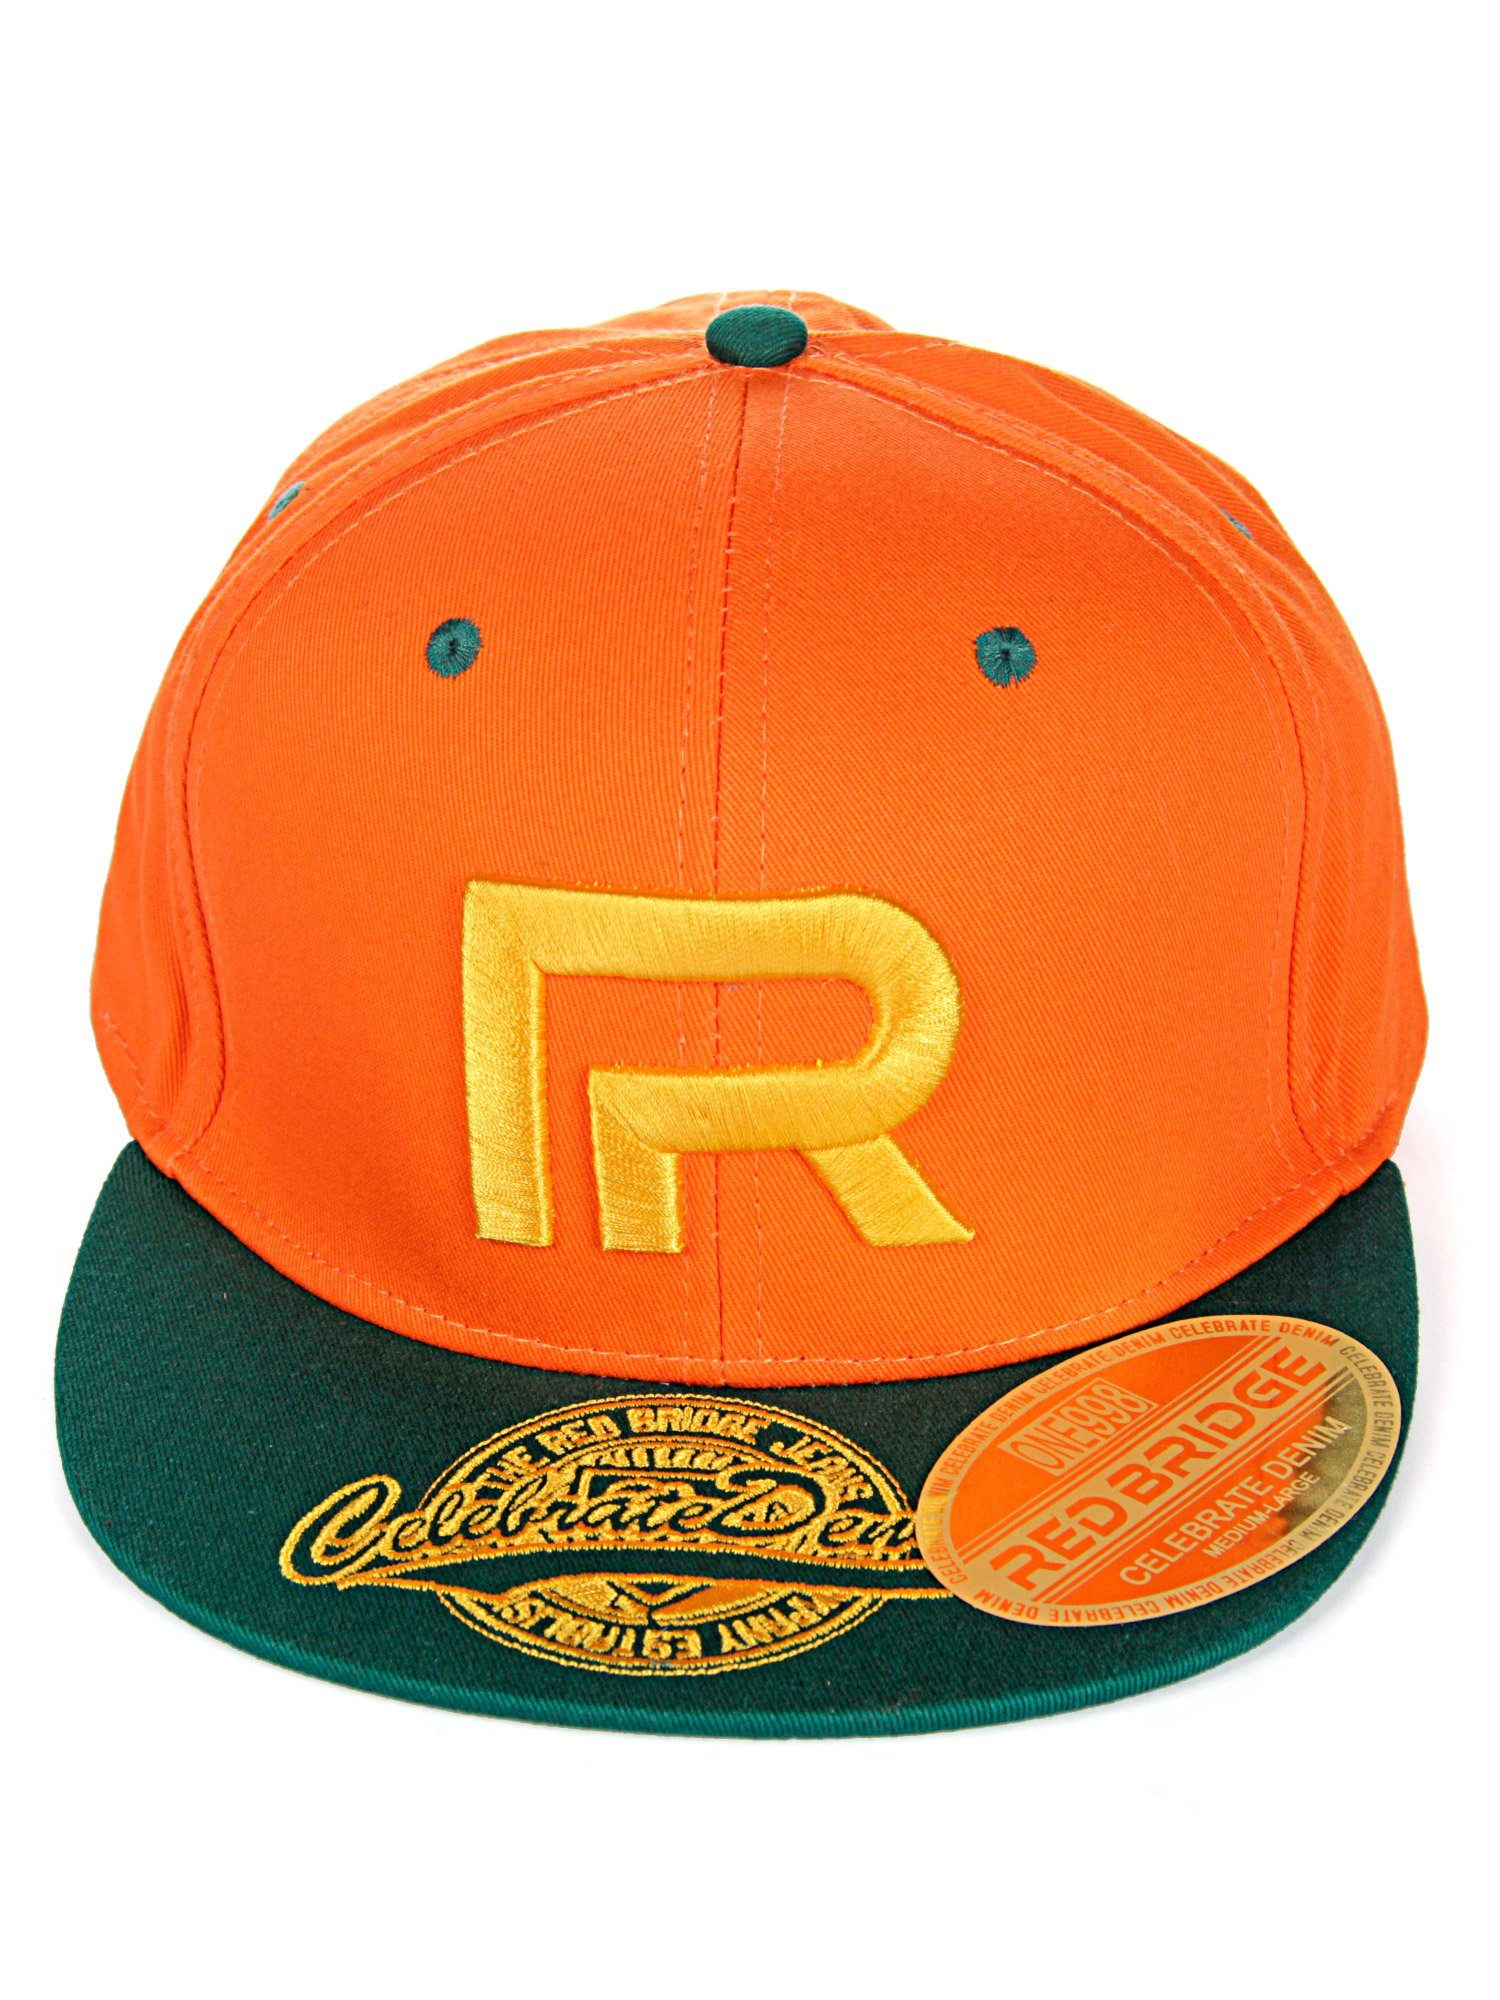 RedBridge Baseball Cap Wellingborough mit Druckverschluss orange-grün | Baseball Caps